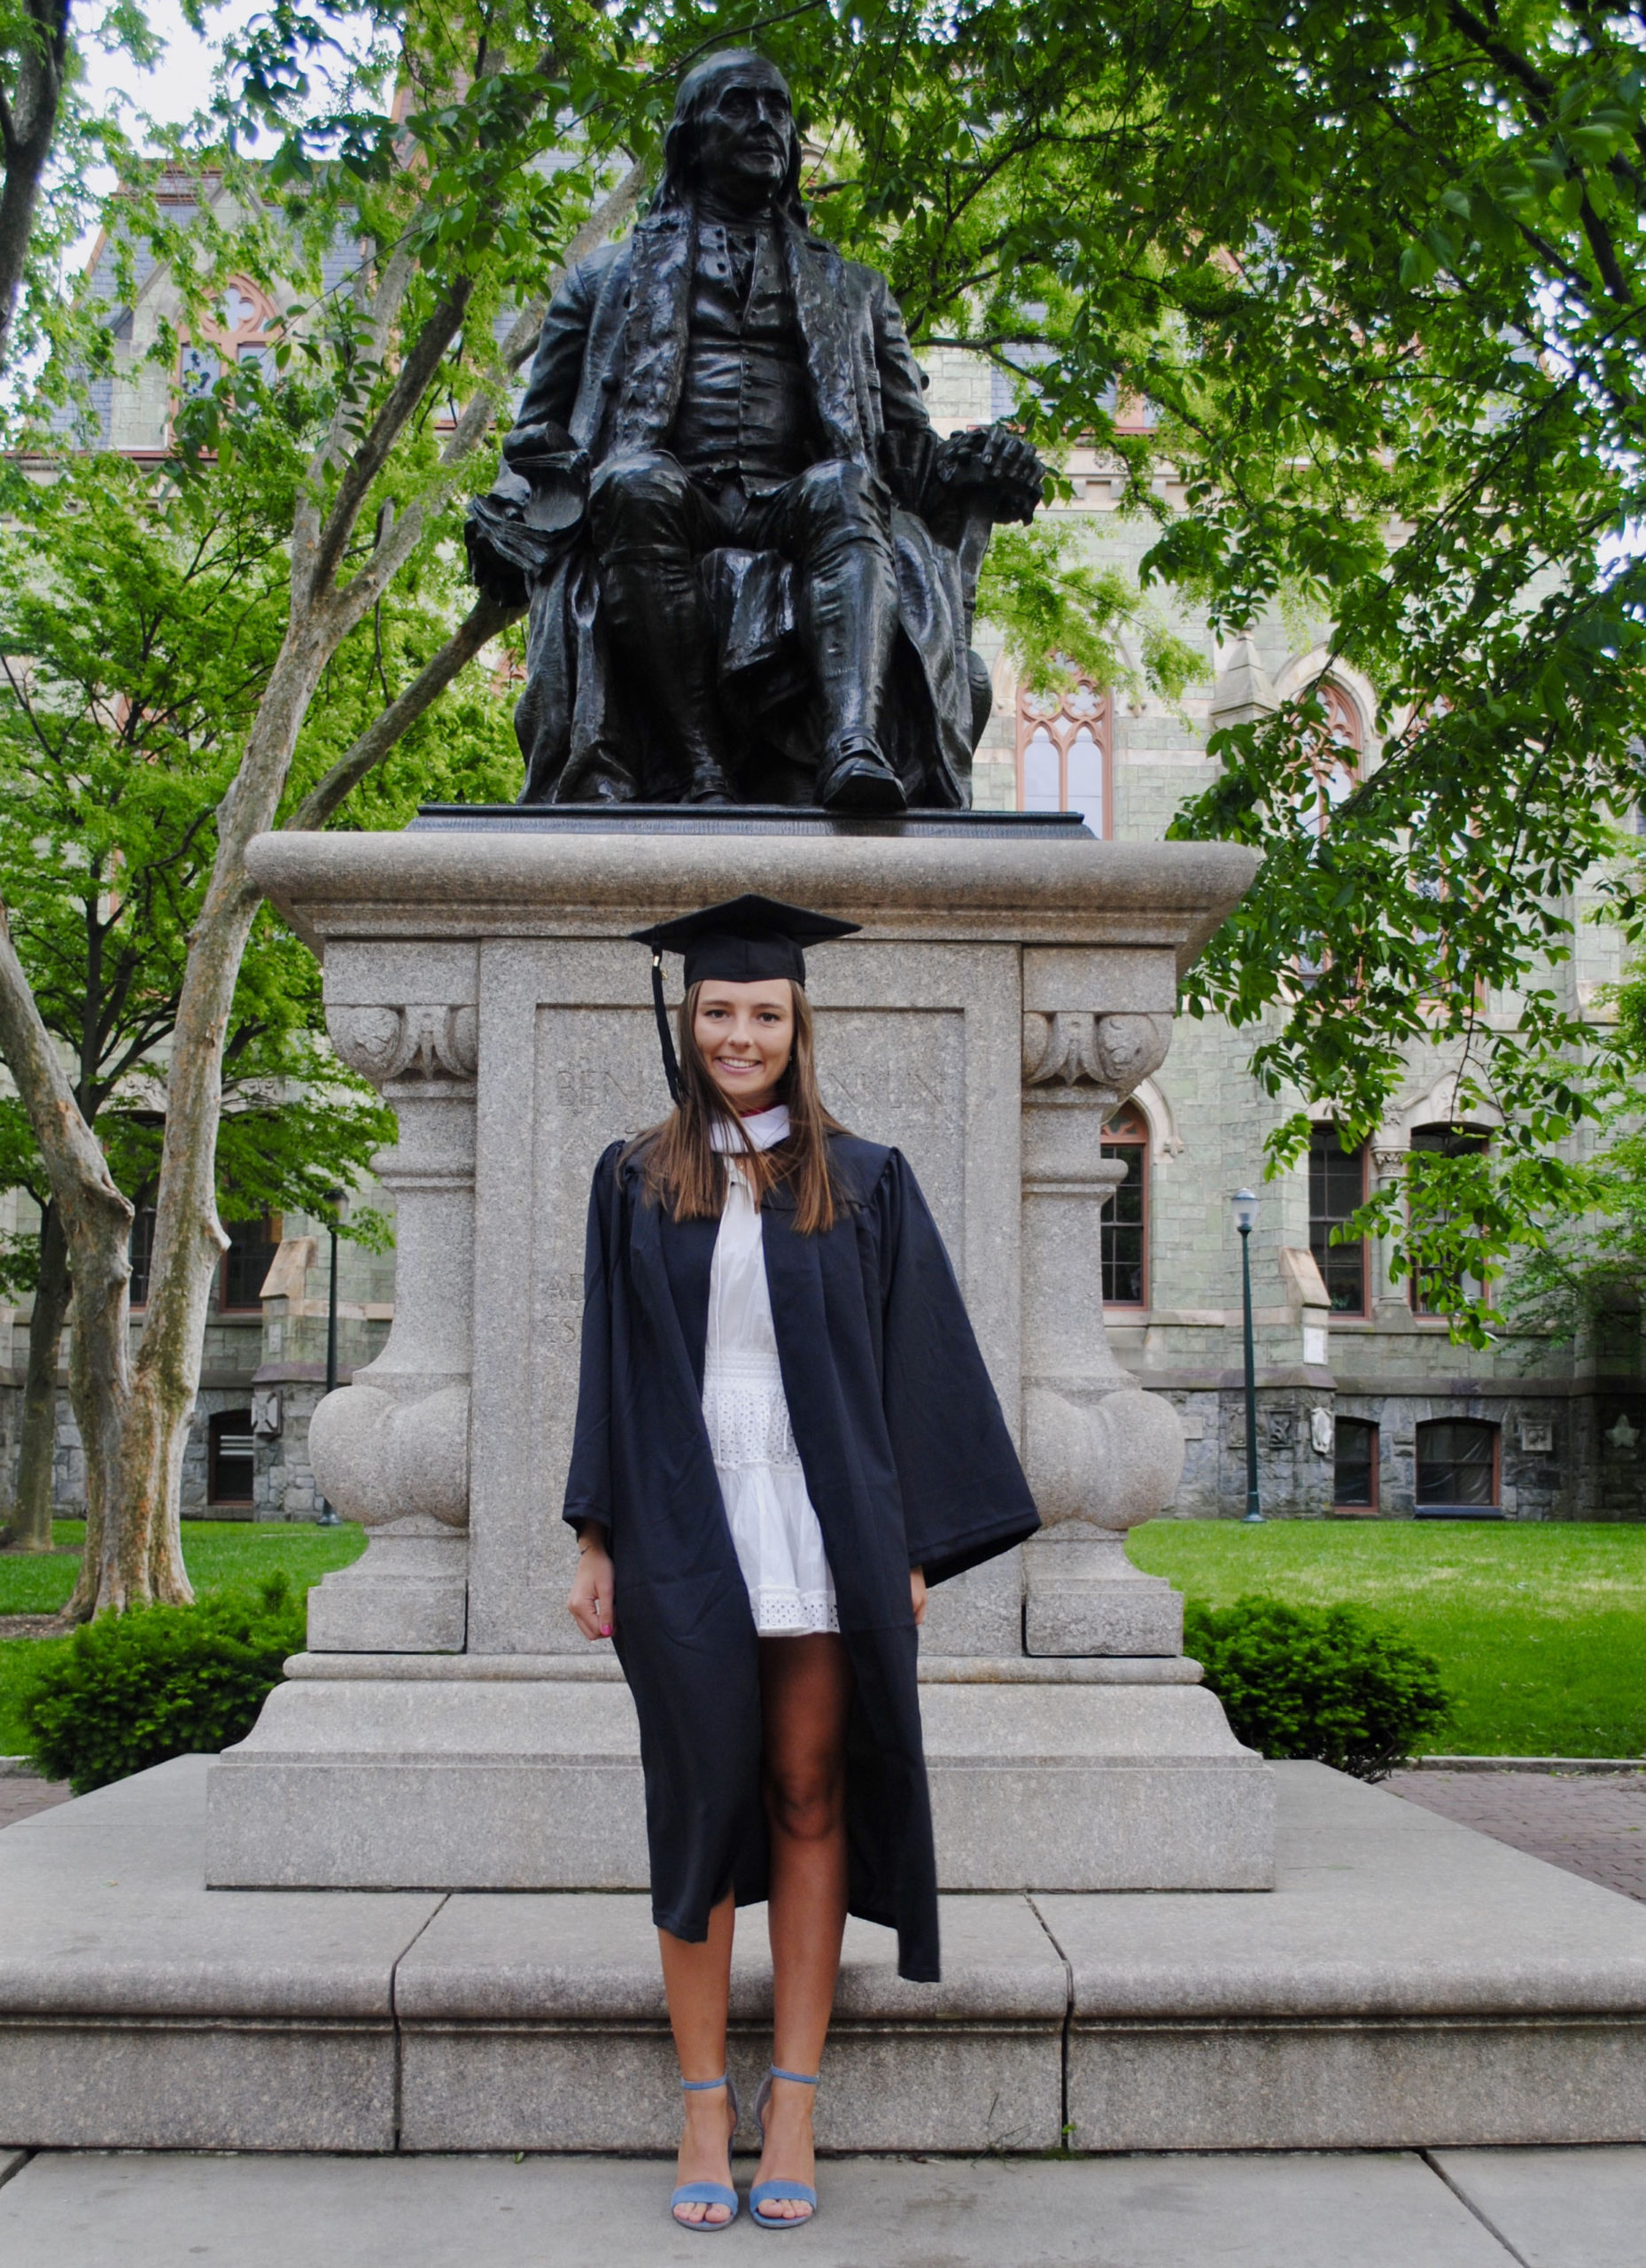 Harriet DeGroot of Bridgehampton graduated on May 18 from the University in Pennsylvania.